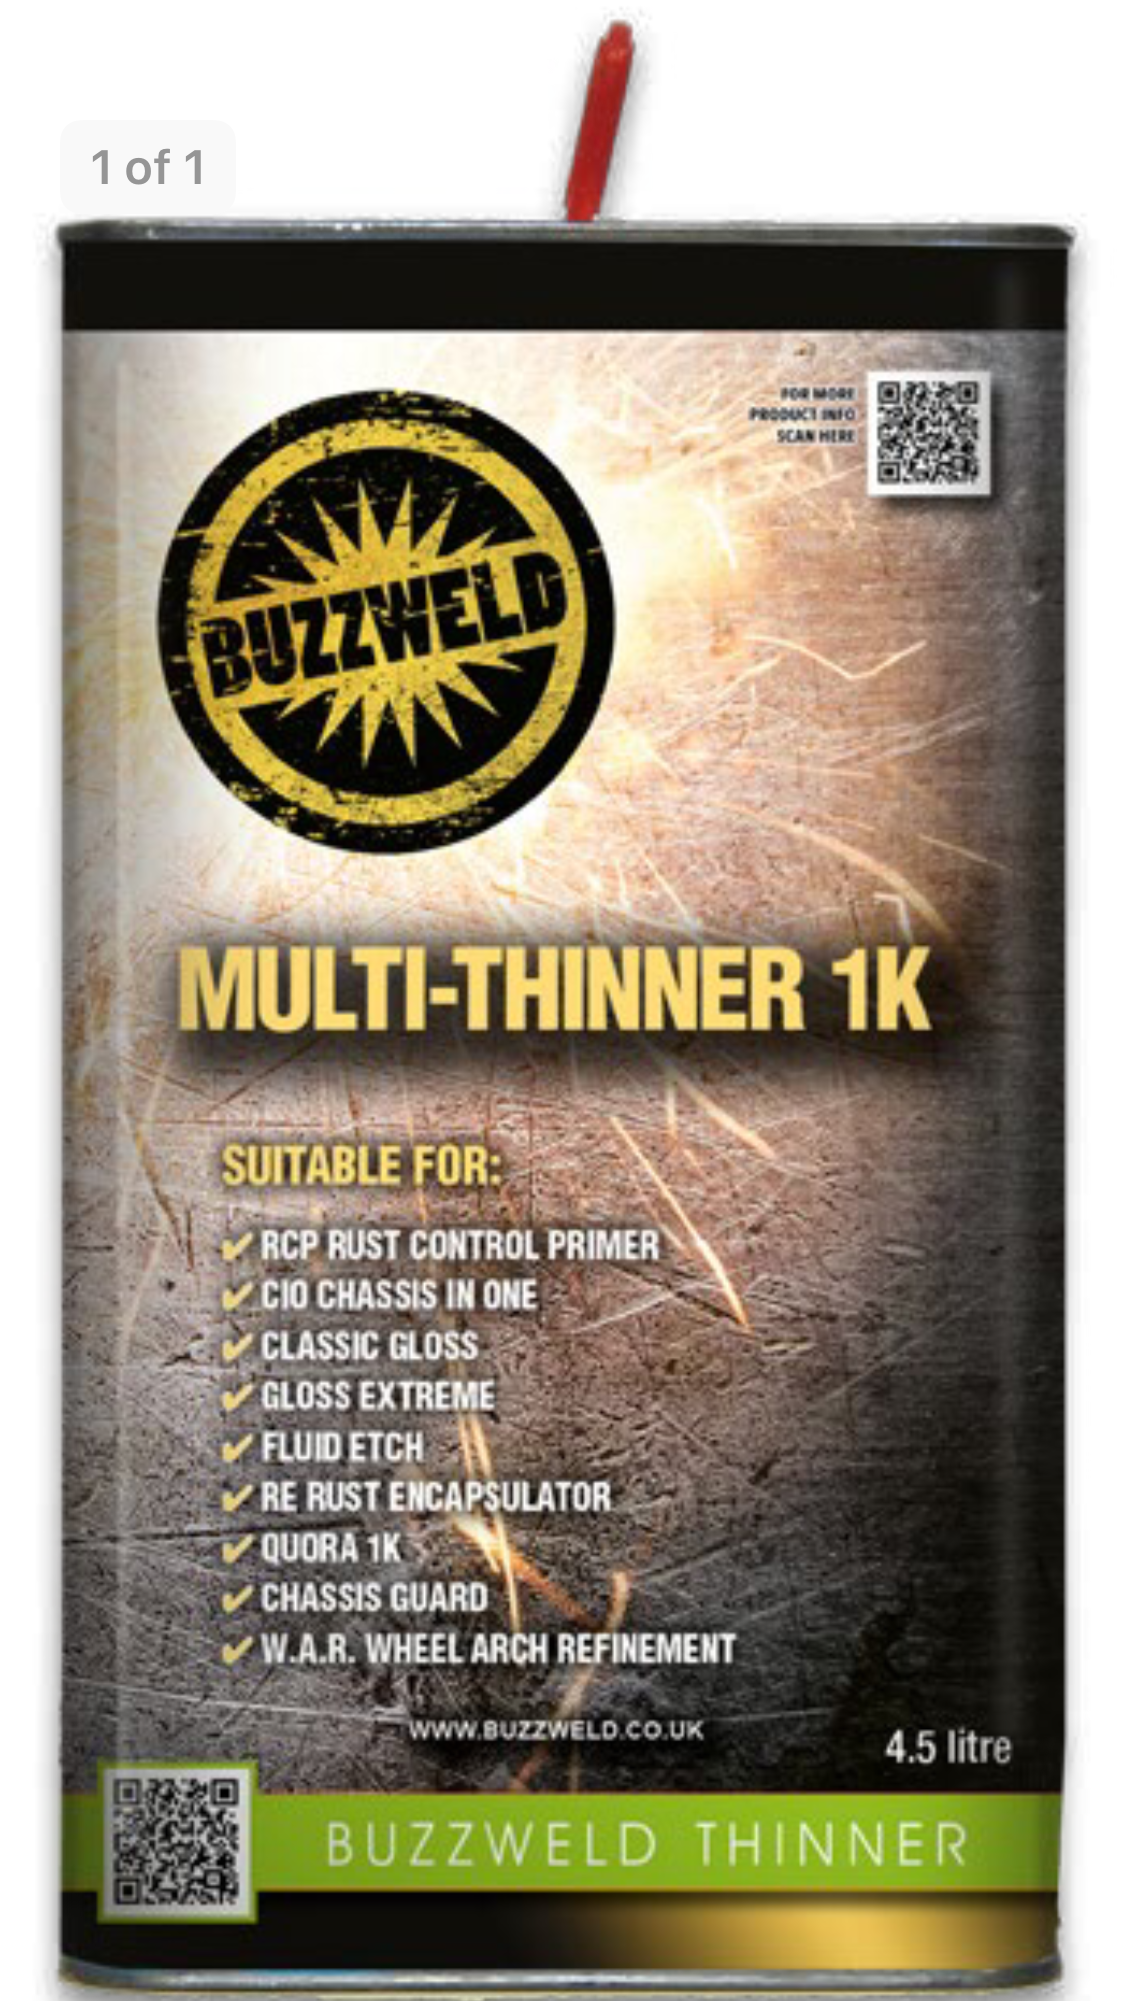 Buzzweld 1K Multi-Thinner